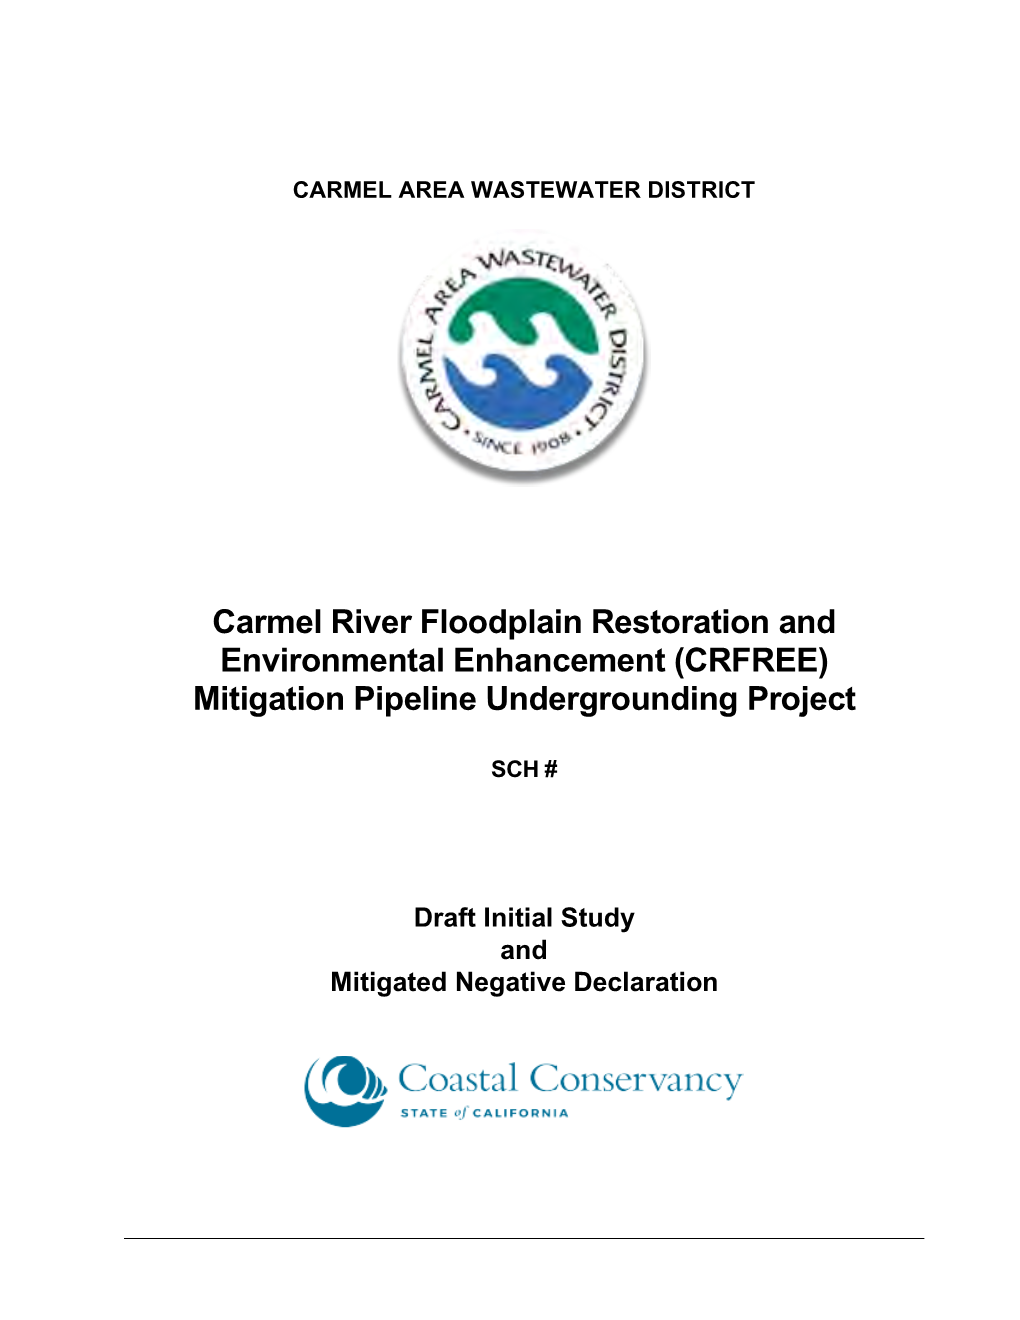 Carmel River Floodplain Restoration and Environmental Enhancement (CRFREE) Mitigation Pipeline Undergrounding Project